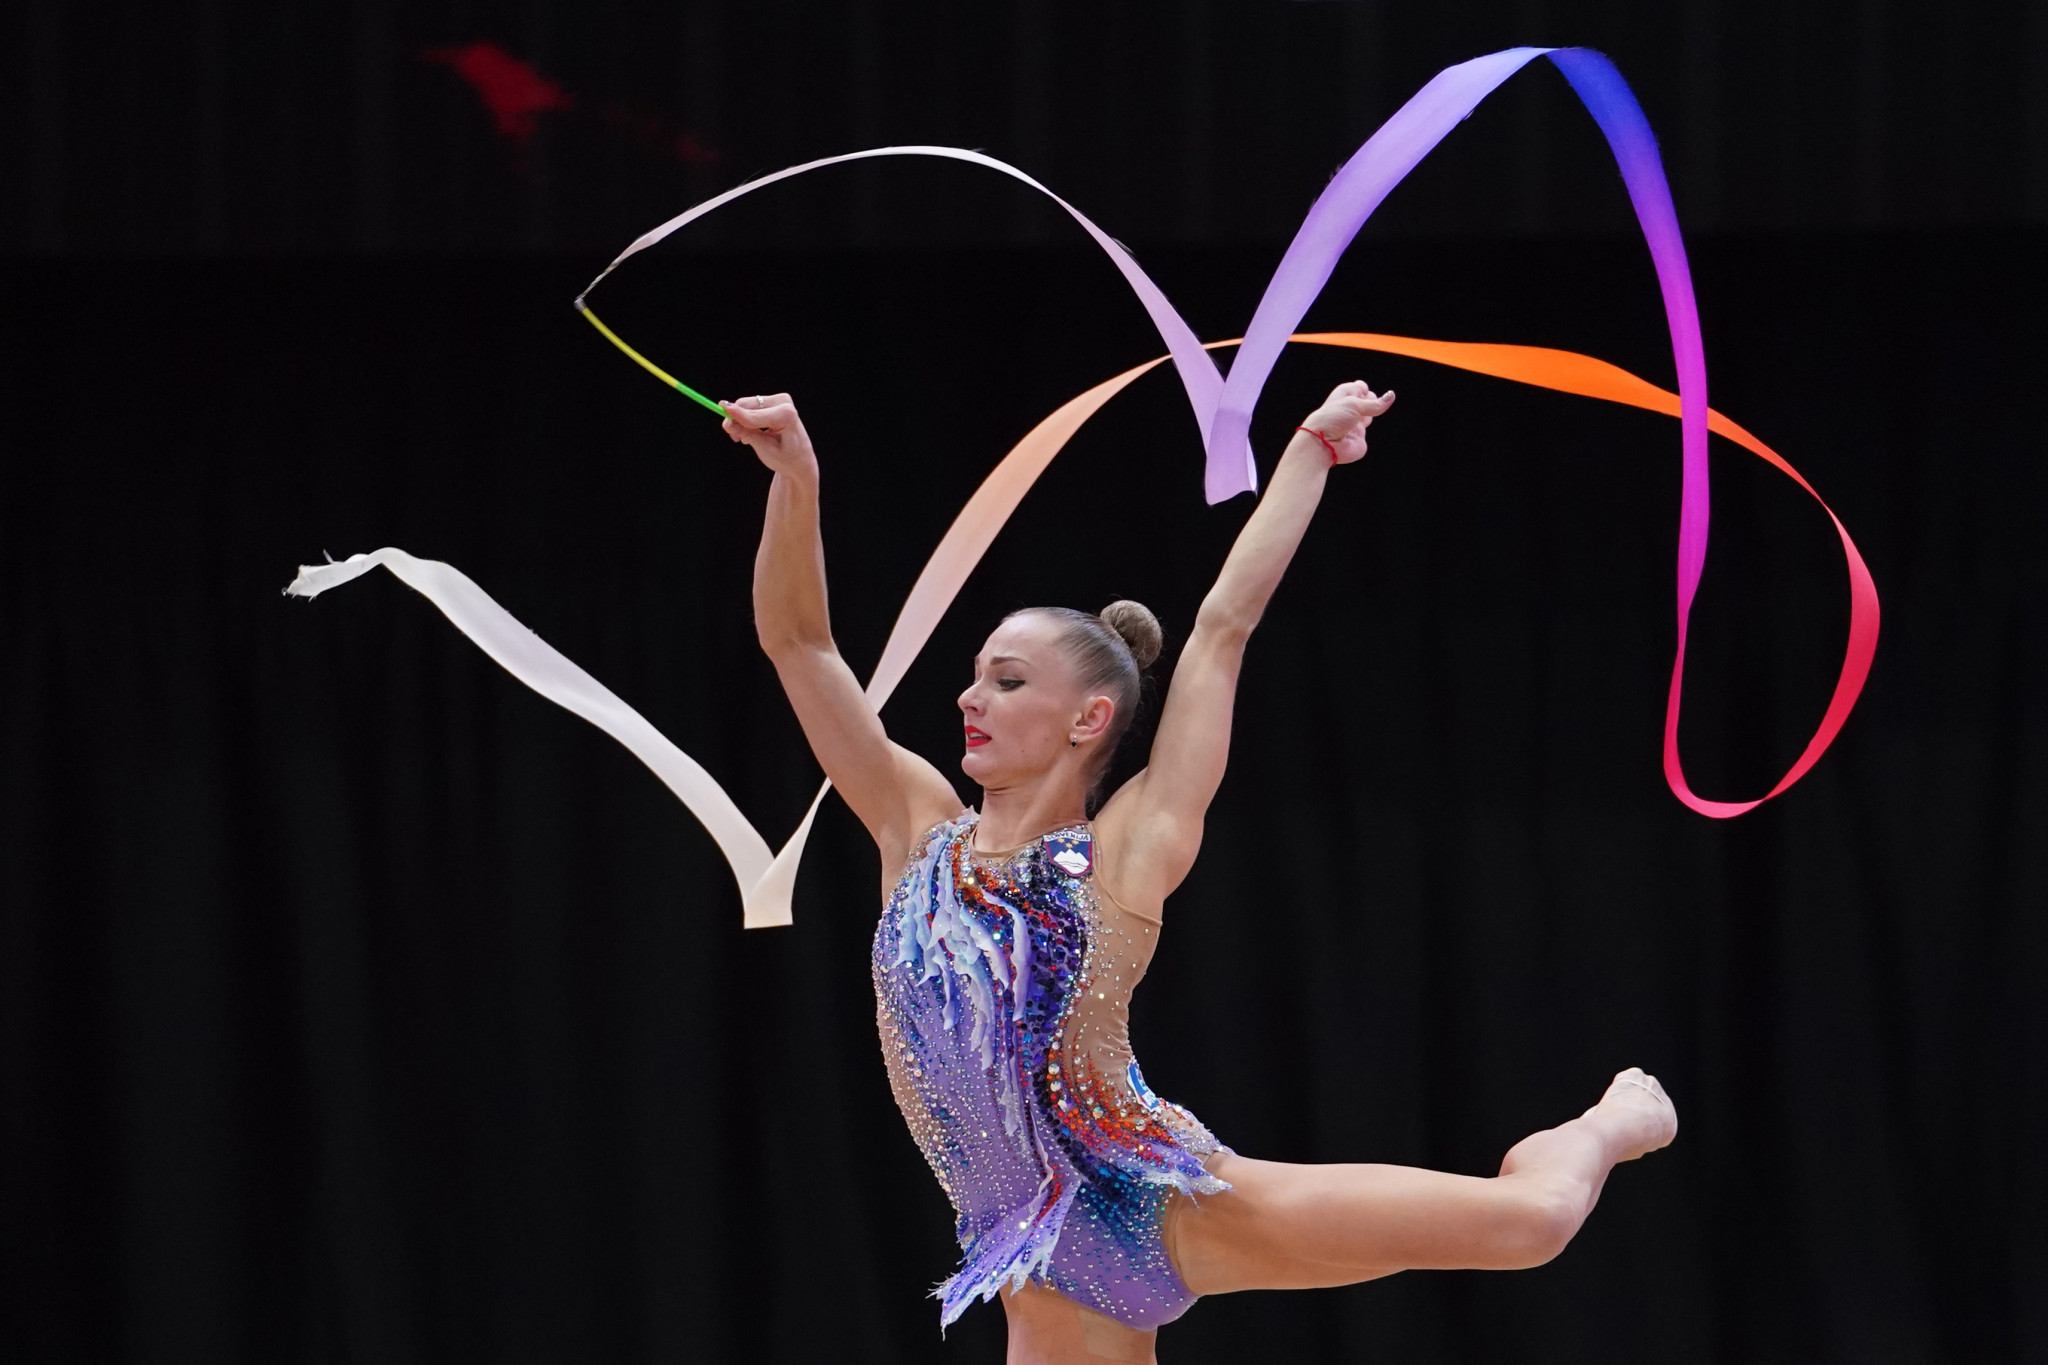 Slovenia's Ekaterina Vedeneeva claimed ribbon gold at the last Rhythmic Gymnastics World Cup in Tashkent ©Getty Images